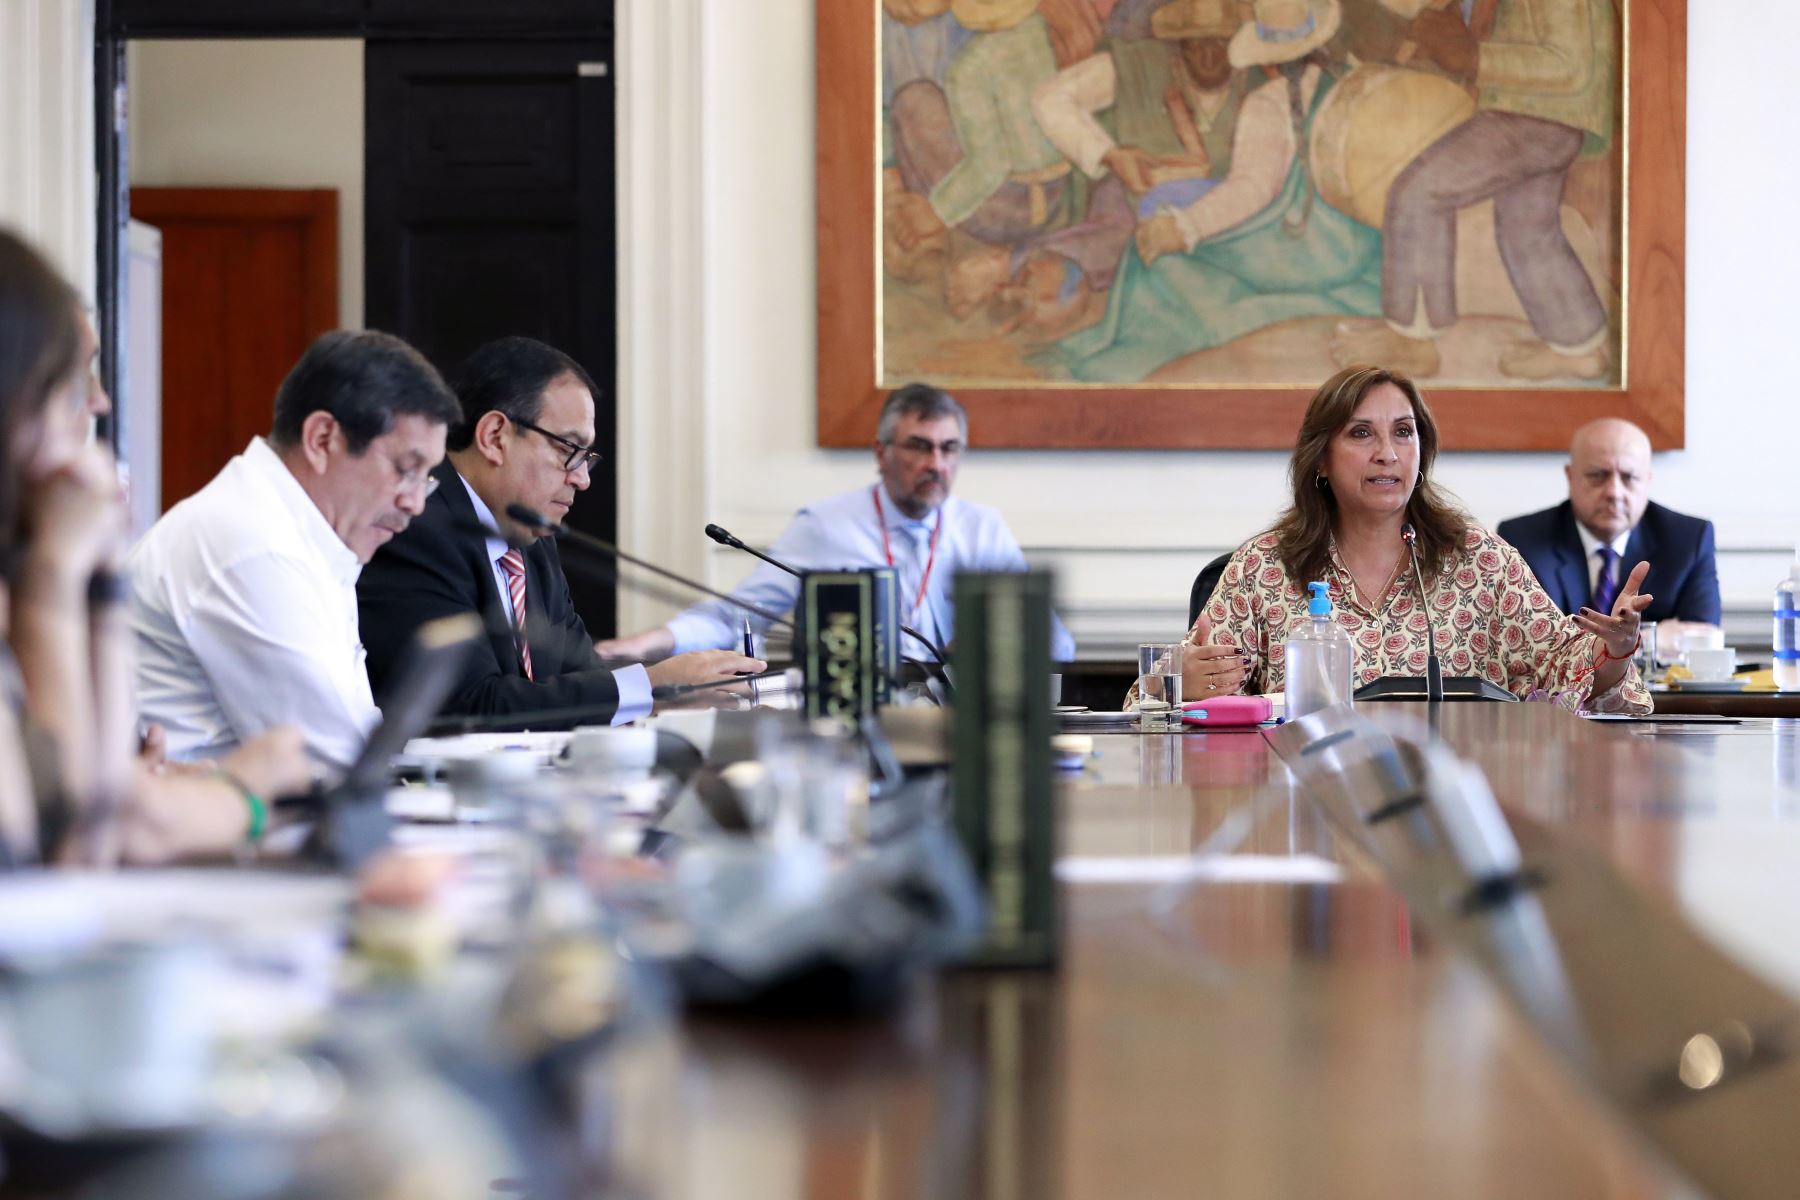 Foto: ANDINA/Prensa Presidencia.